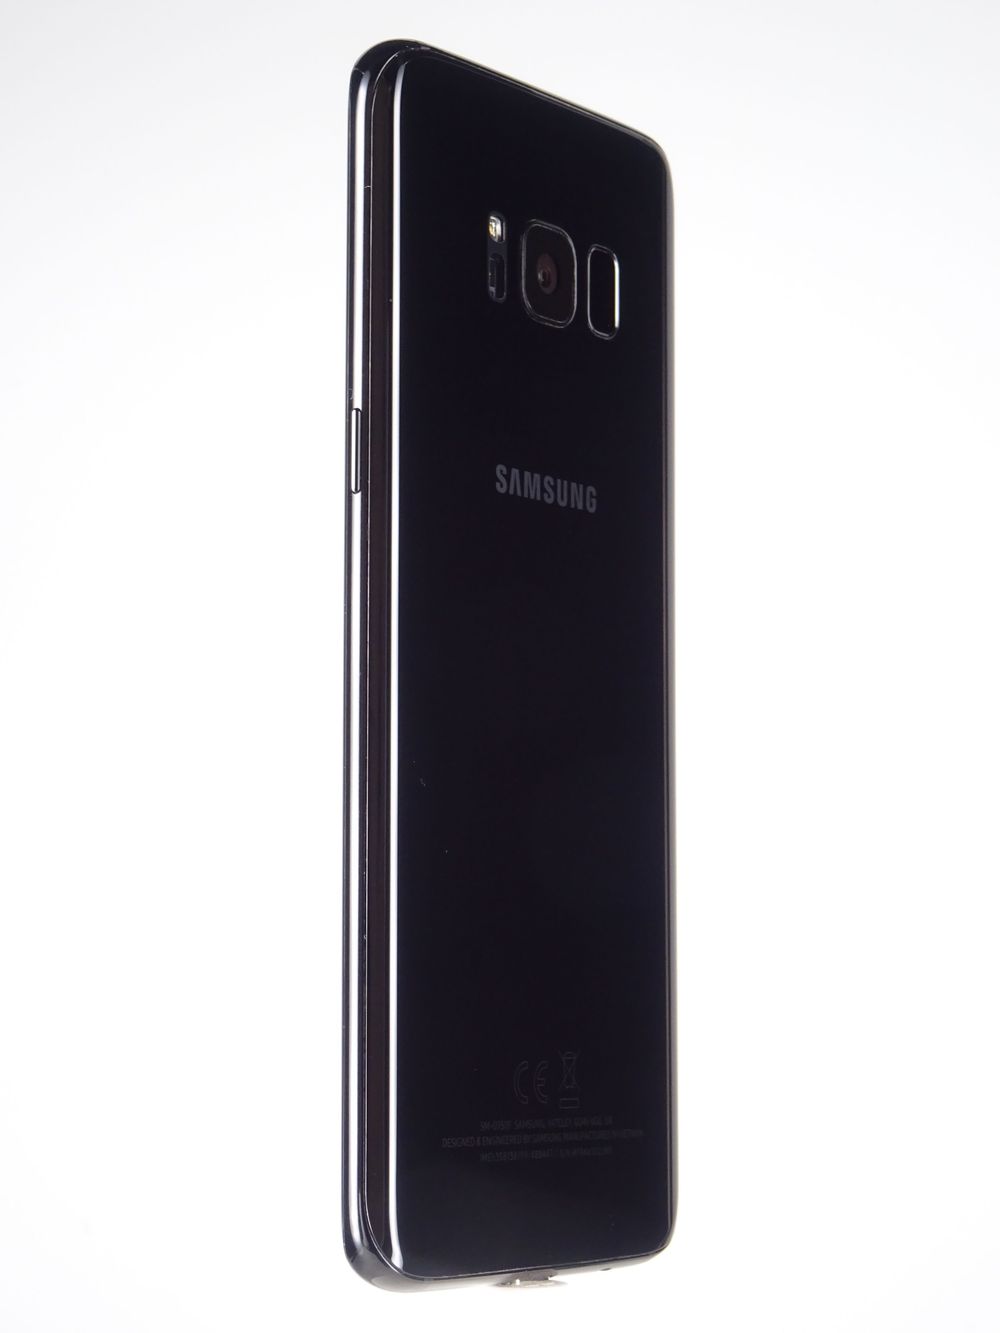 horizon Knead bust Telefoane Samsung, Galaxy S8, 64 GB, Midnight Black - de la 929.99 lei |  Flip.ro